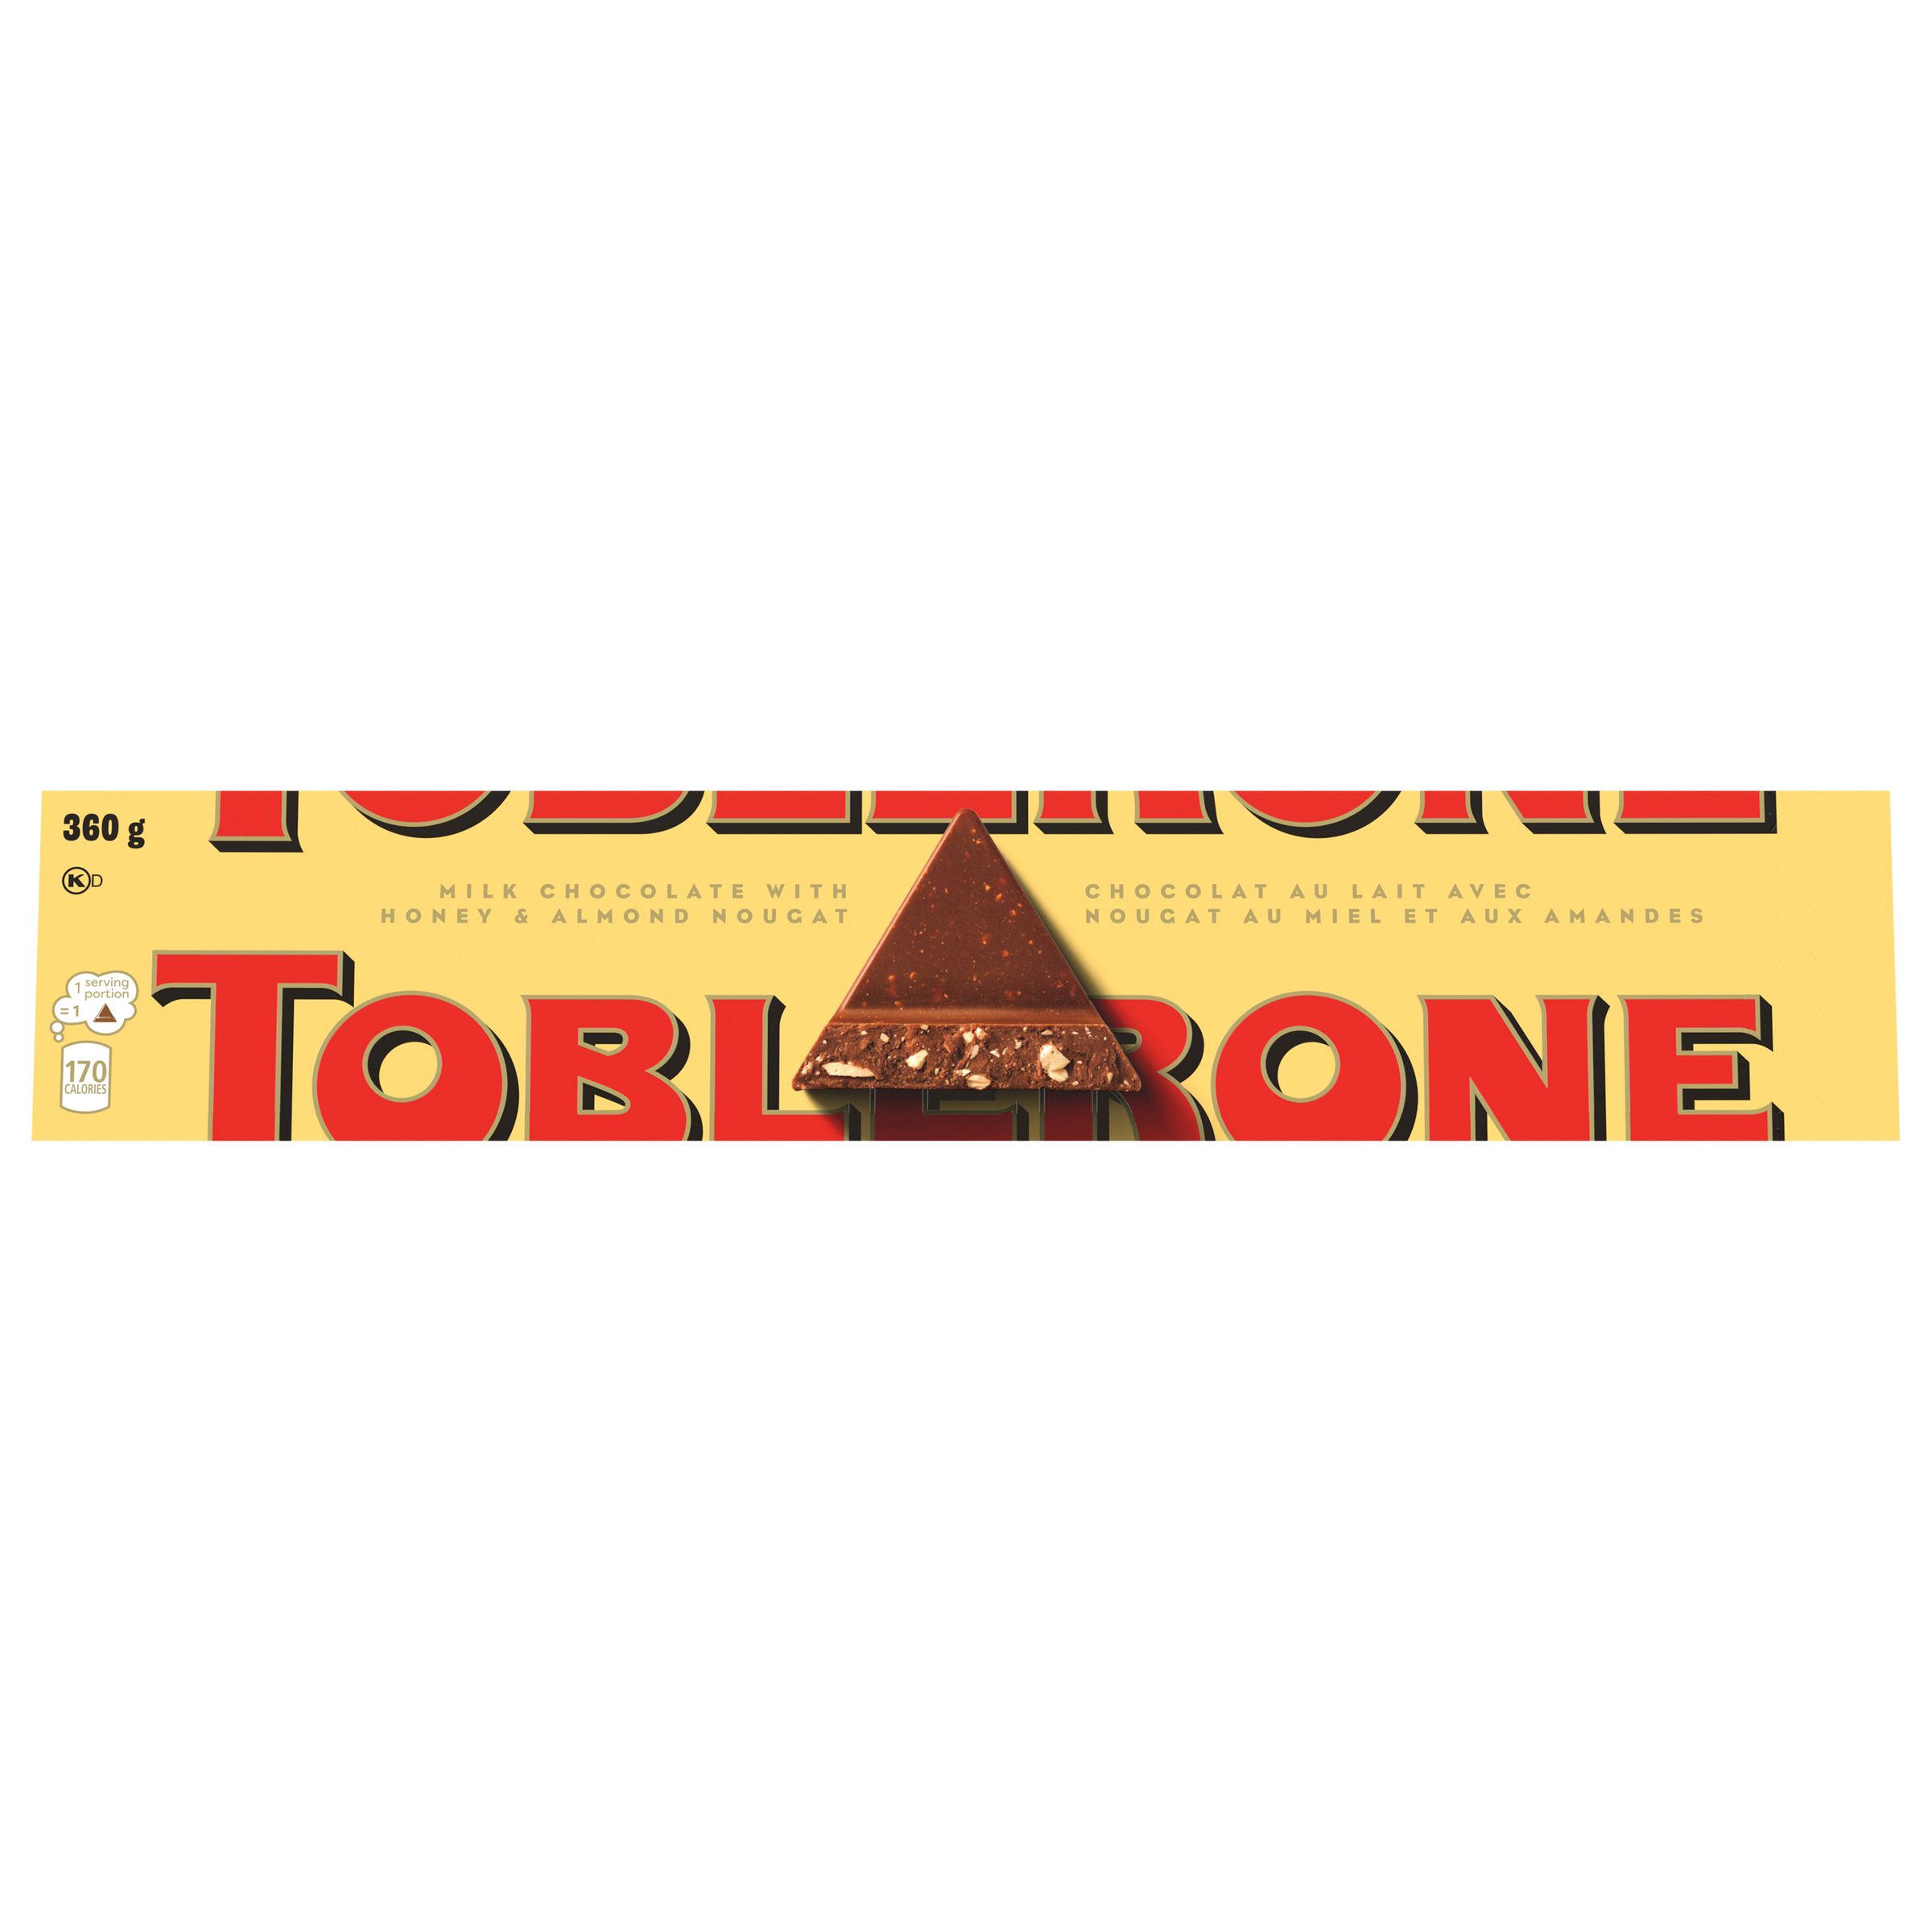 Toblerone milk chocolate bar 360 g